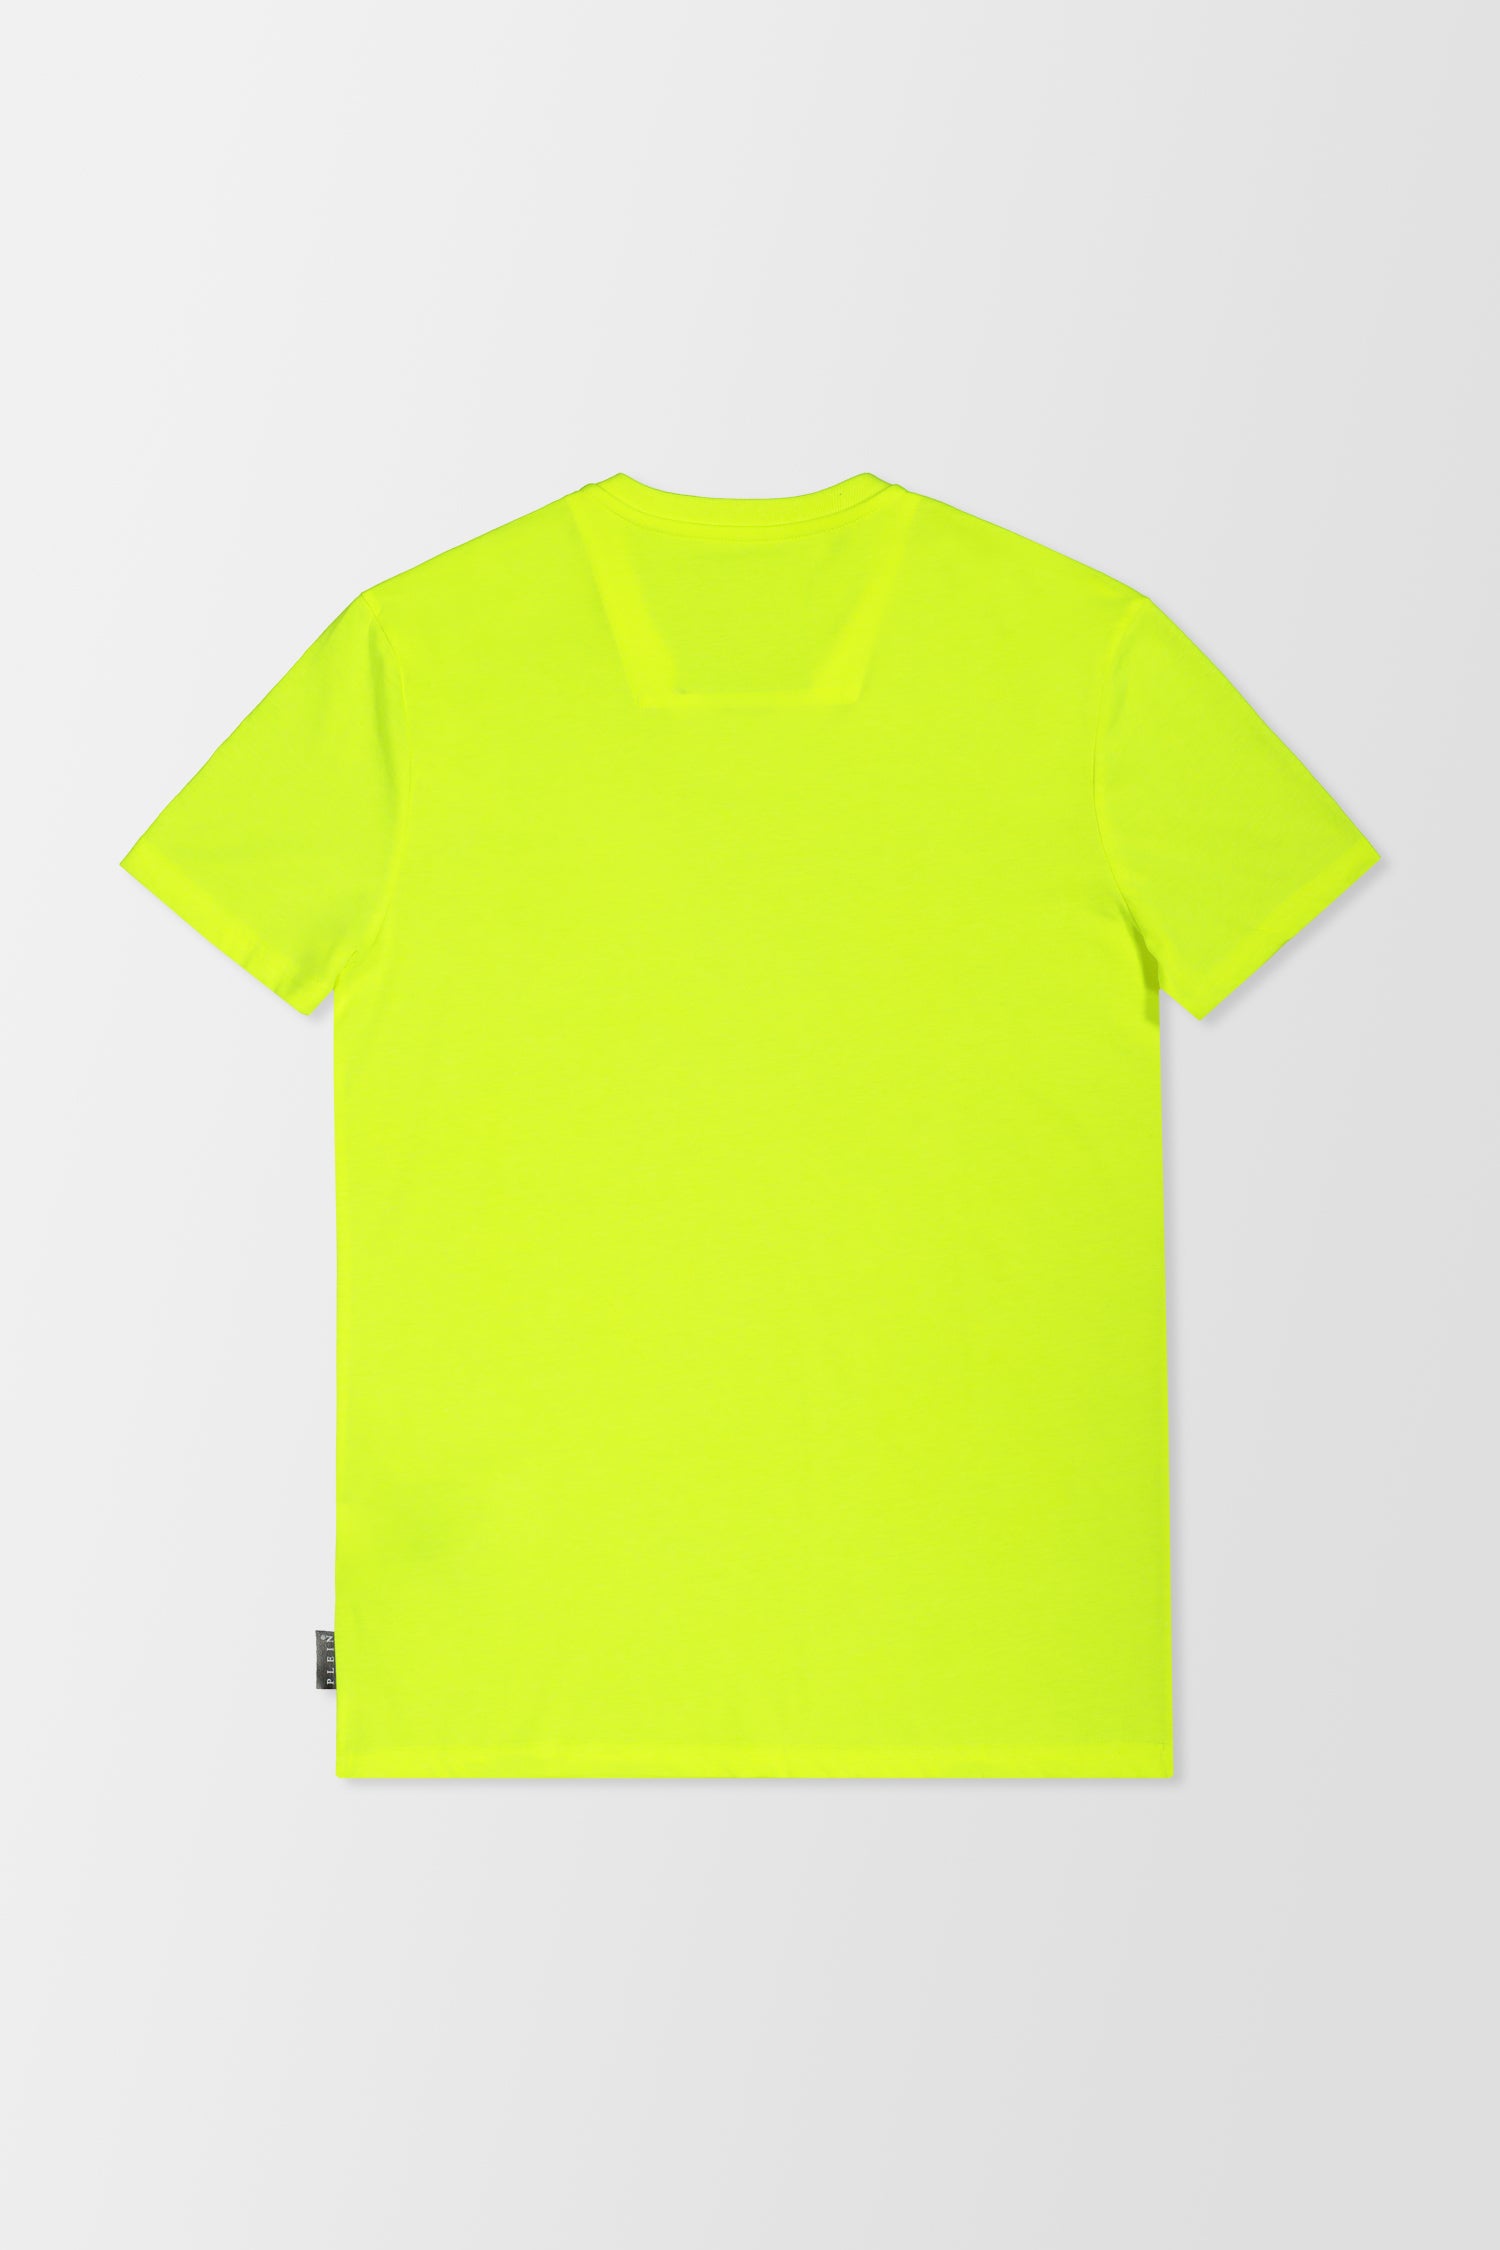 Philipp Plein Yellow V-Neck SS Rock PP T-Shirt